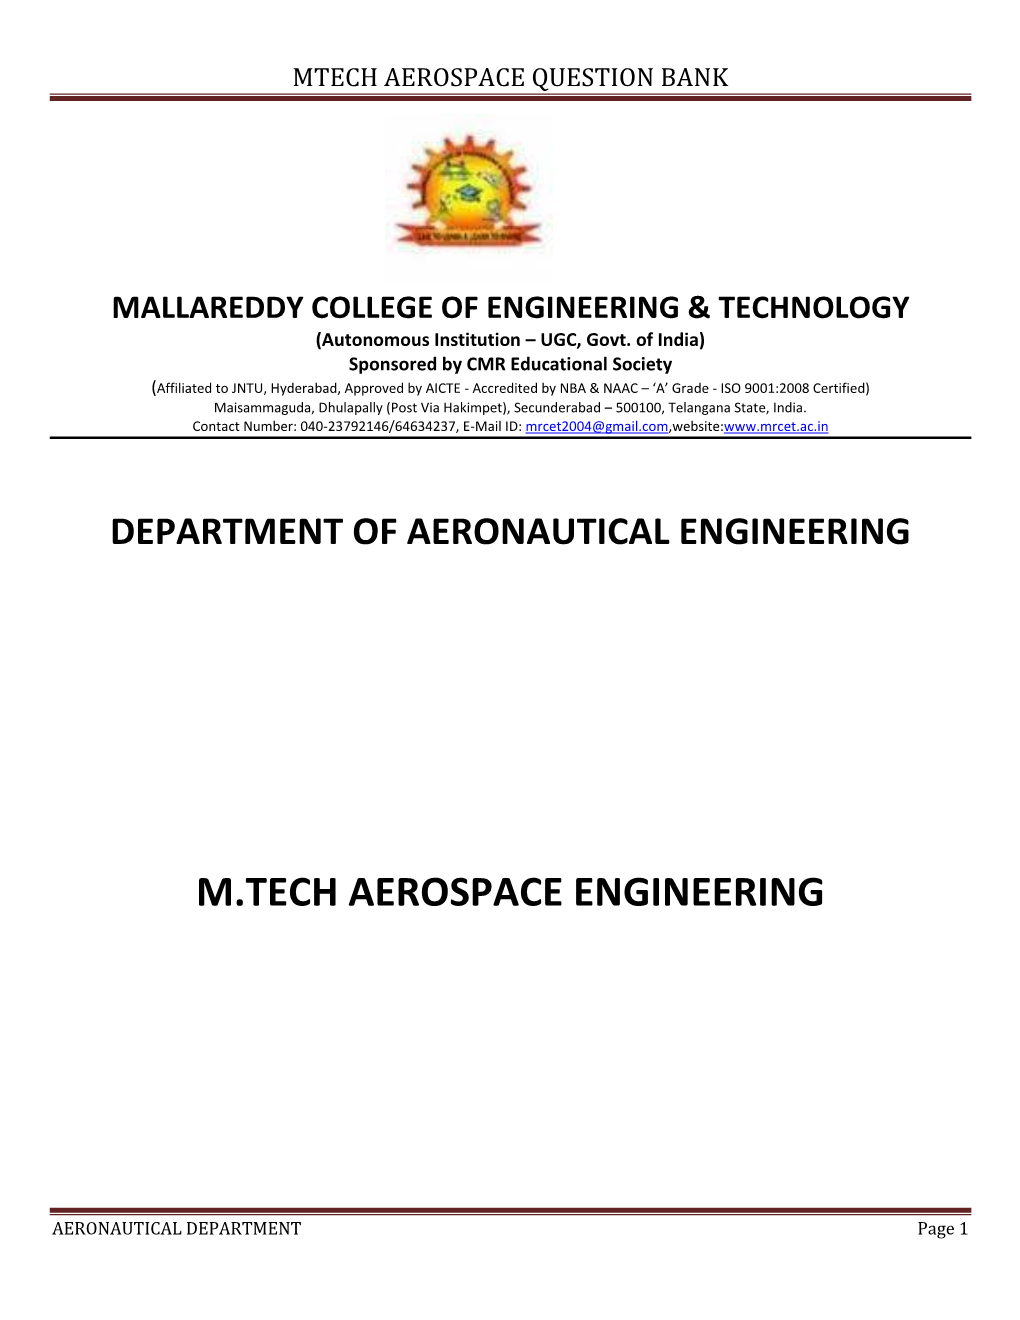 M.Tech Aerospace Engineering